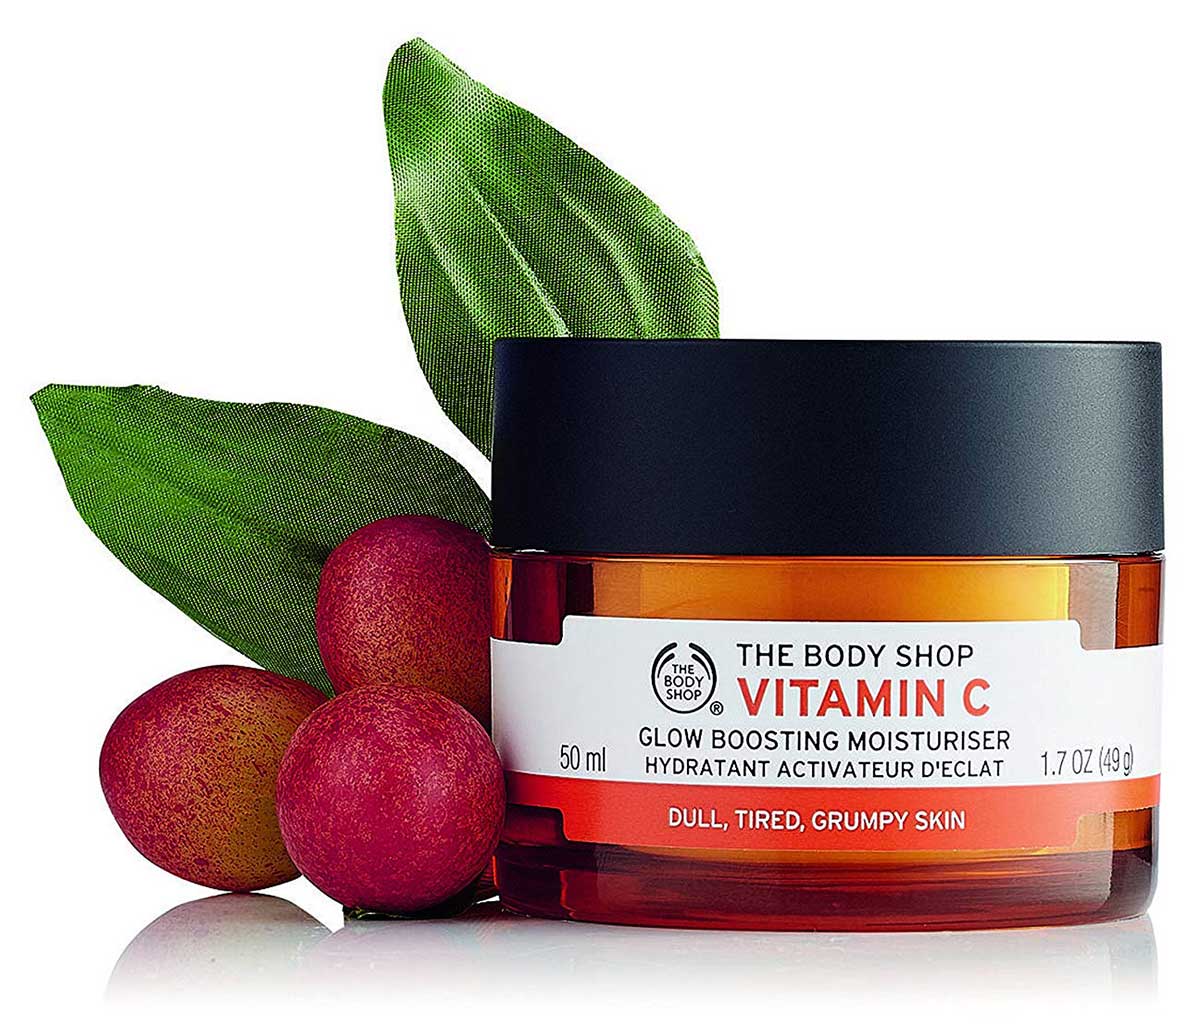 The Body Shop Vitamin C Glow Boosting Moisturiser 50ml - Anti-Aging Products